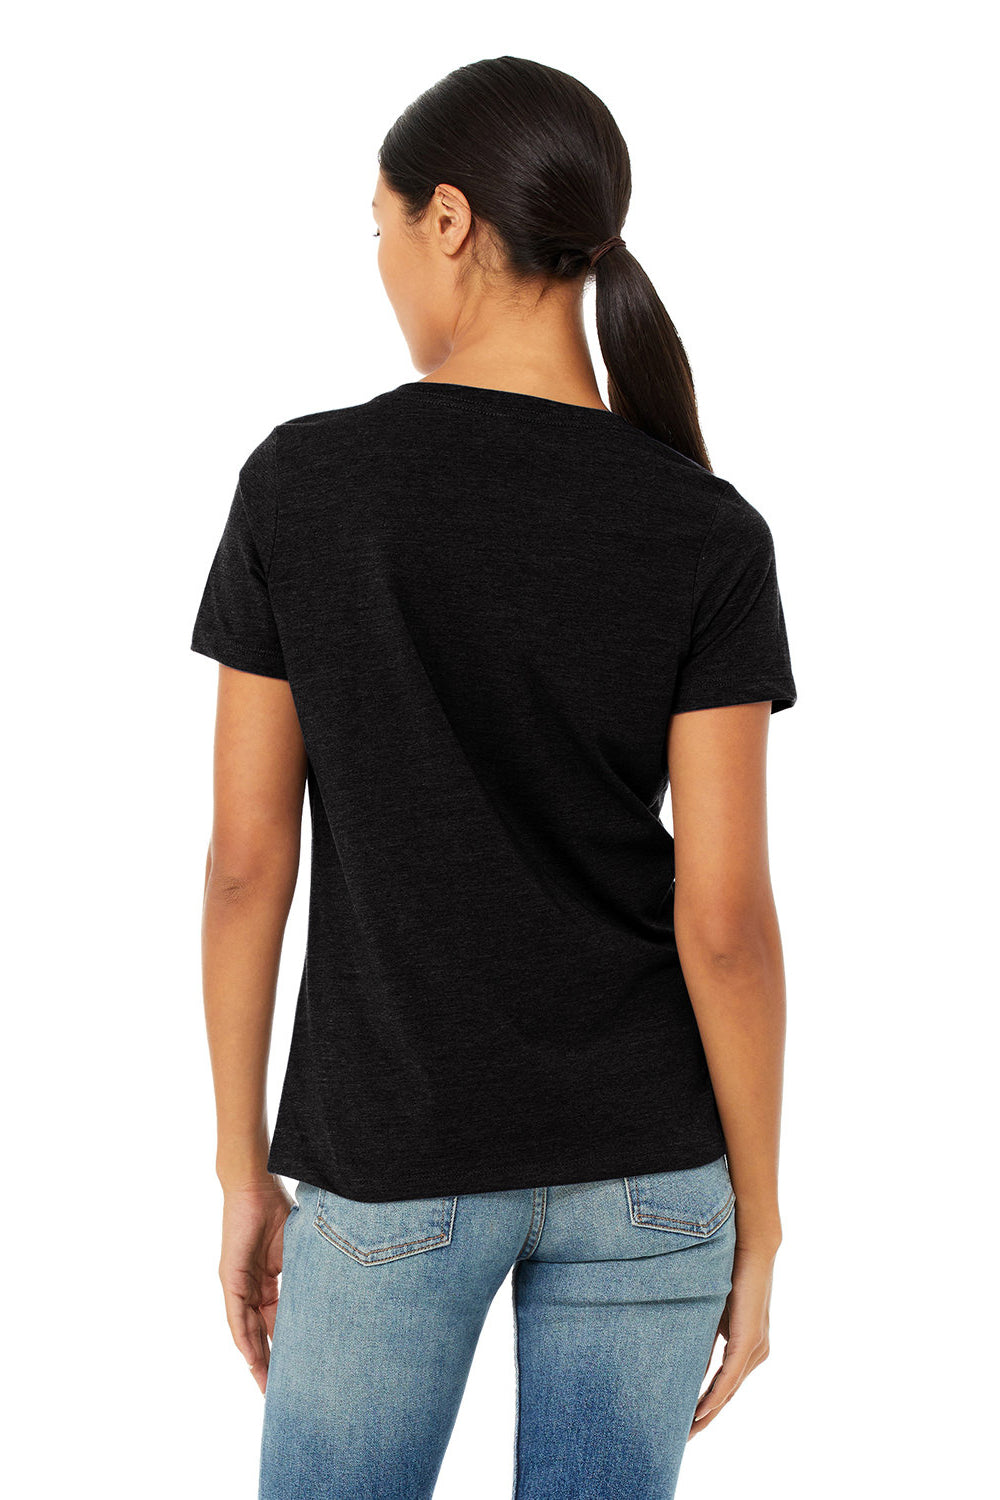 Bella + Canvas BC6405CVC Womens CVC Short Sleeve V-Neck T-Shirt Solid Black Model Back